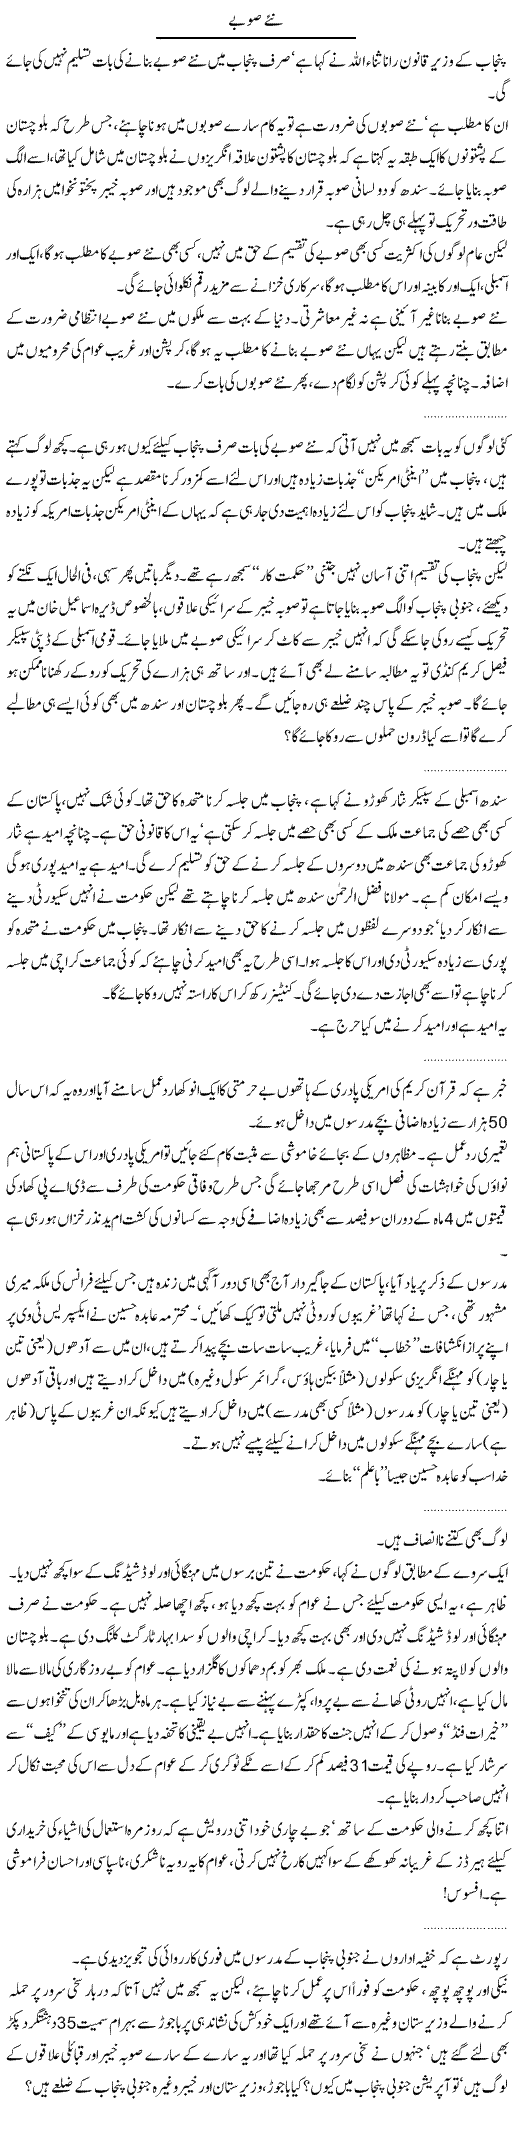 New Provinces Express Column Abdullah Tariq 14 April 2011